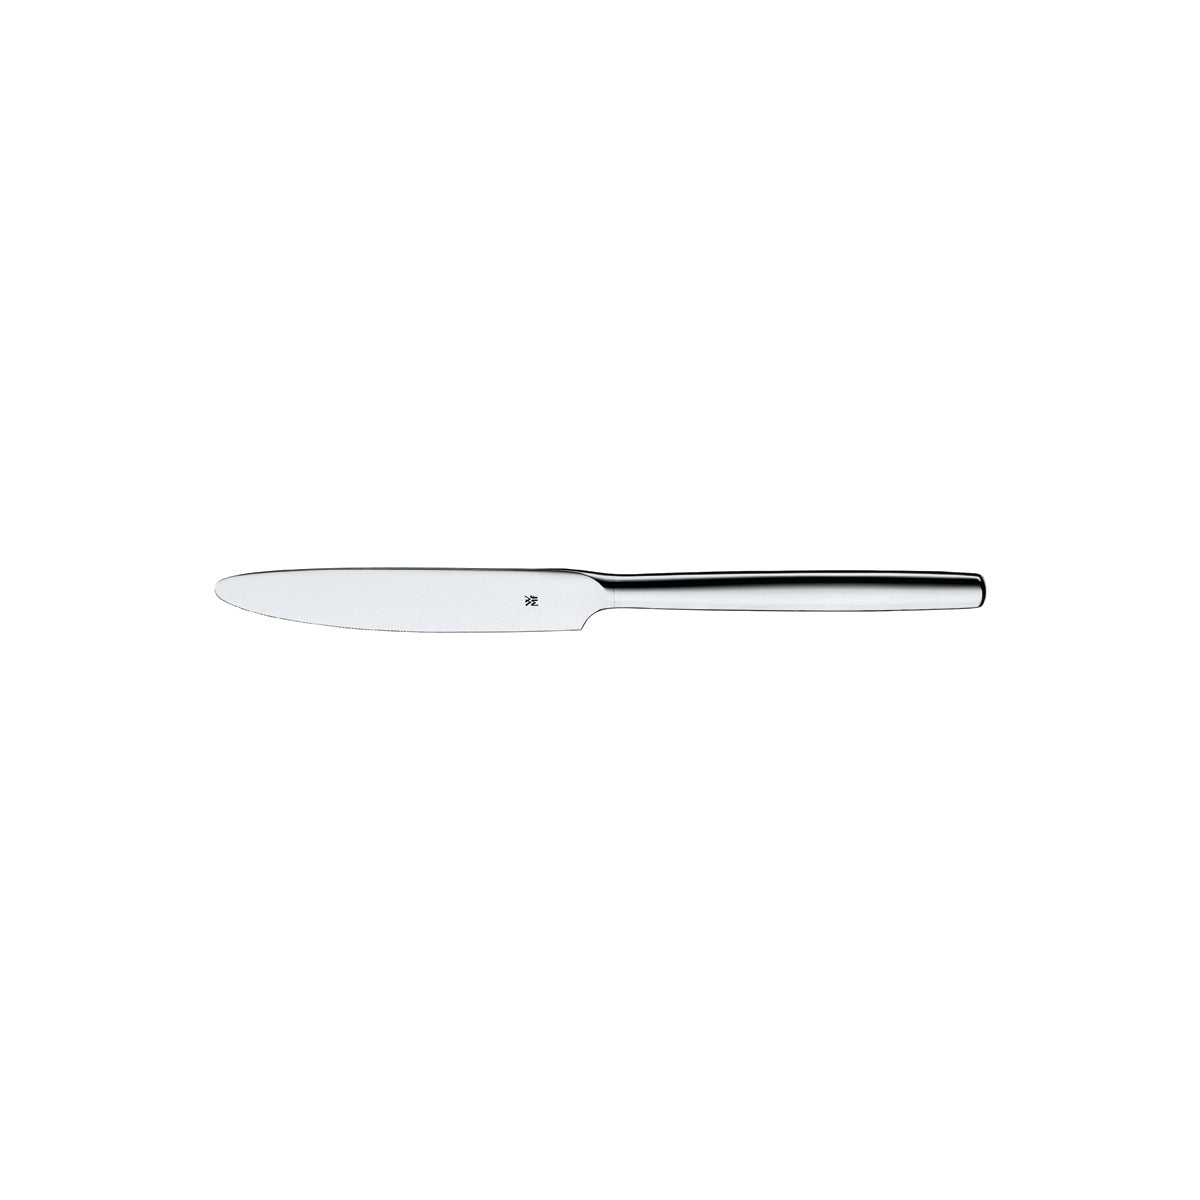 11.0403.6049 WMF Bistro Table Knife Stainless Steel Tomkin Australia Hospitality Supplies